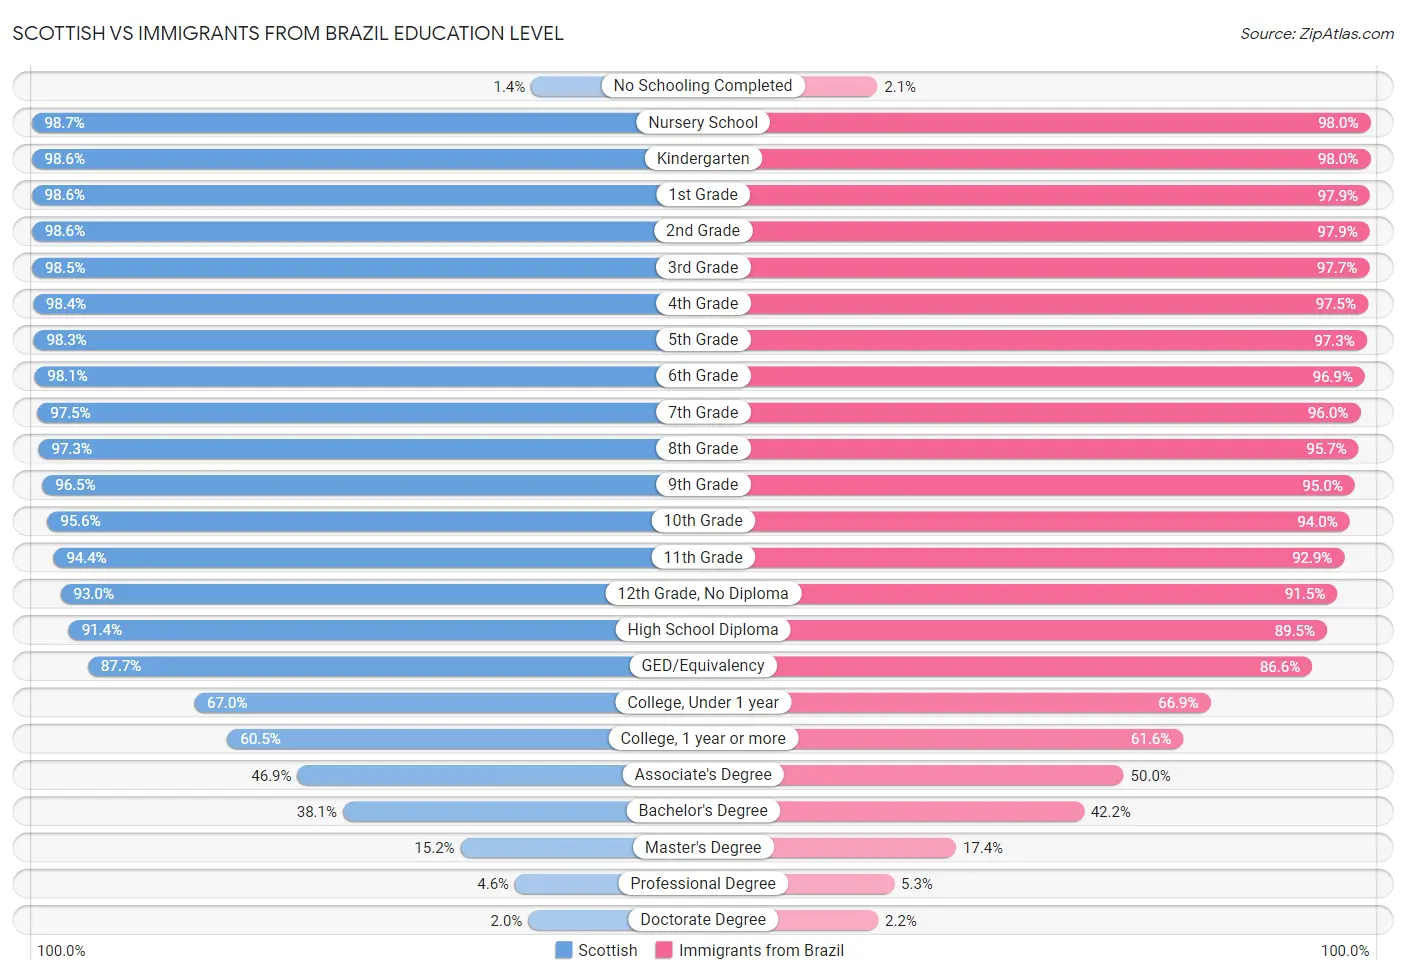 Scottish vs Immigrants from Brazil Education Level